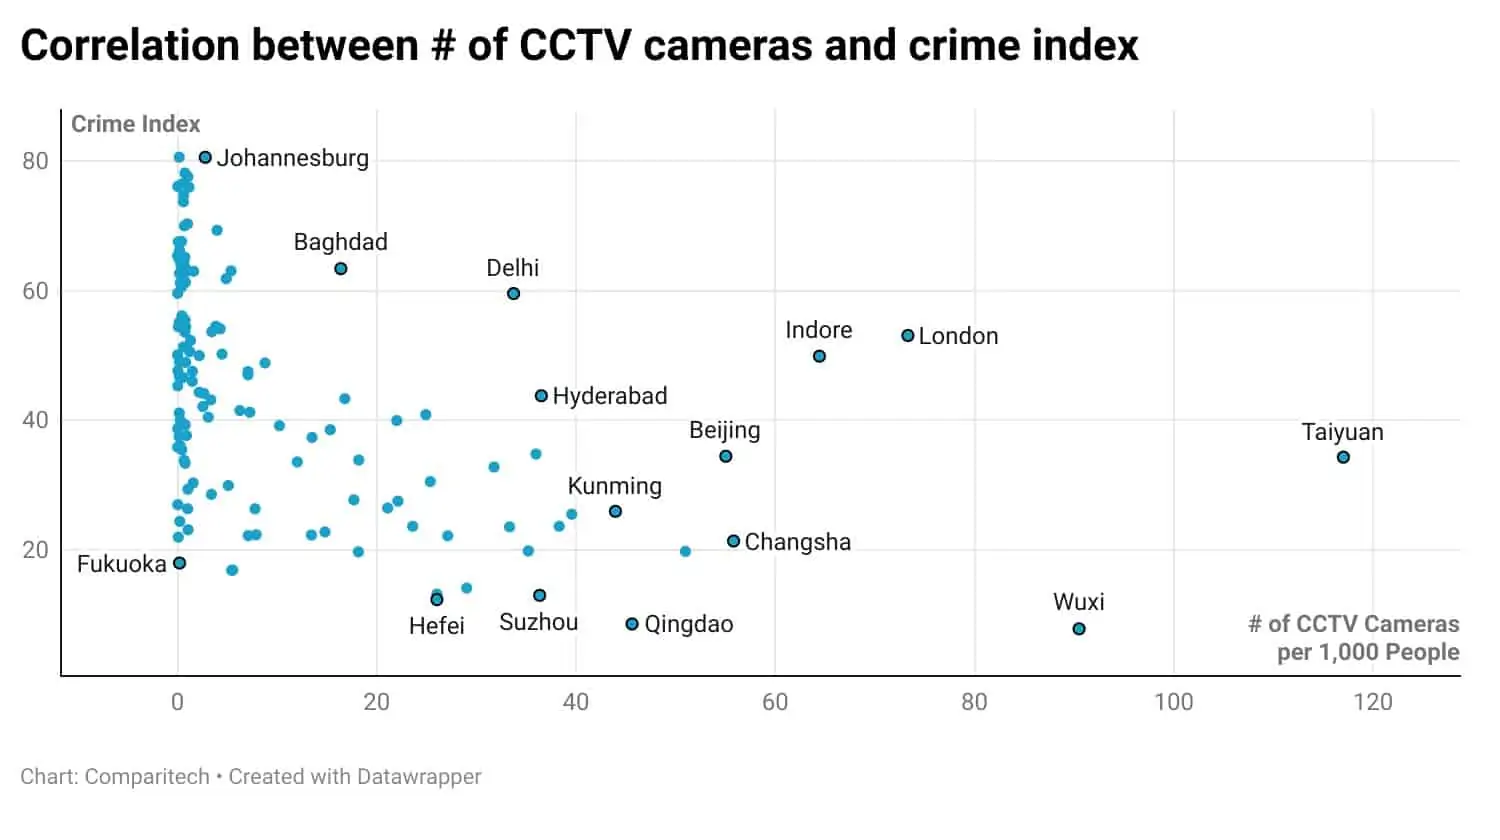 Correlation between CCTV camera figures and crime rates